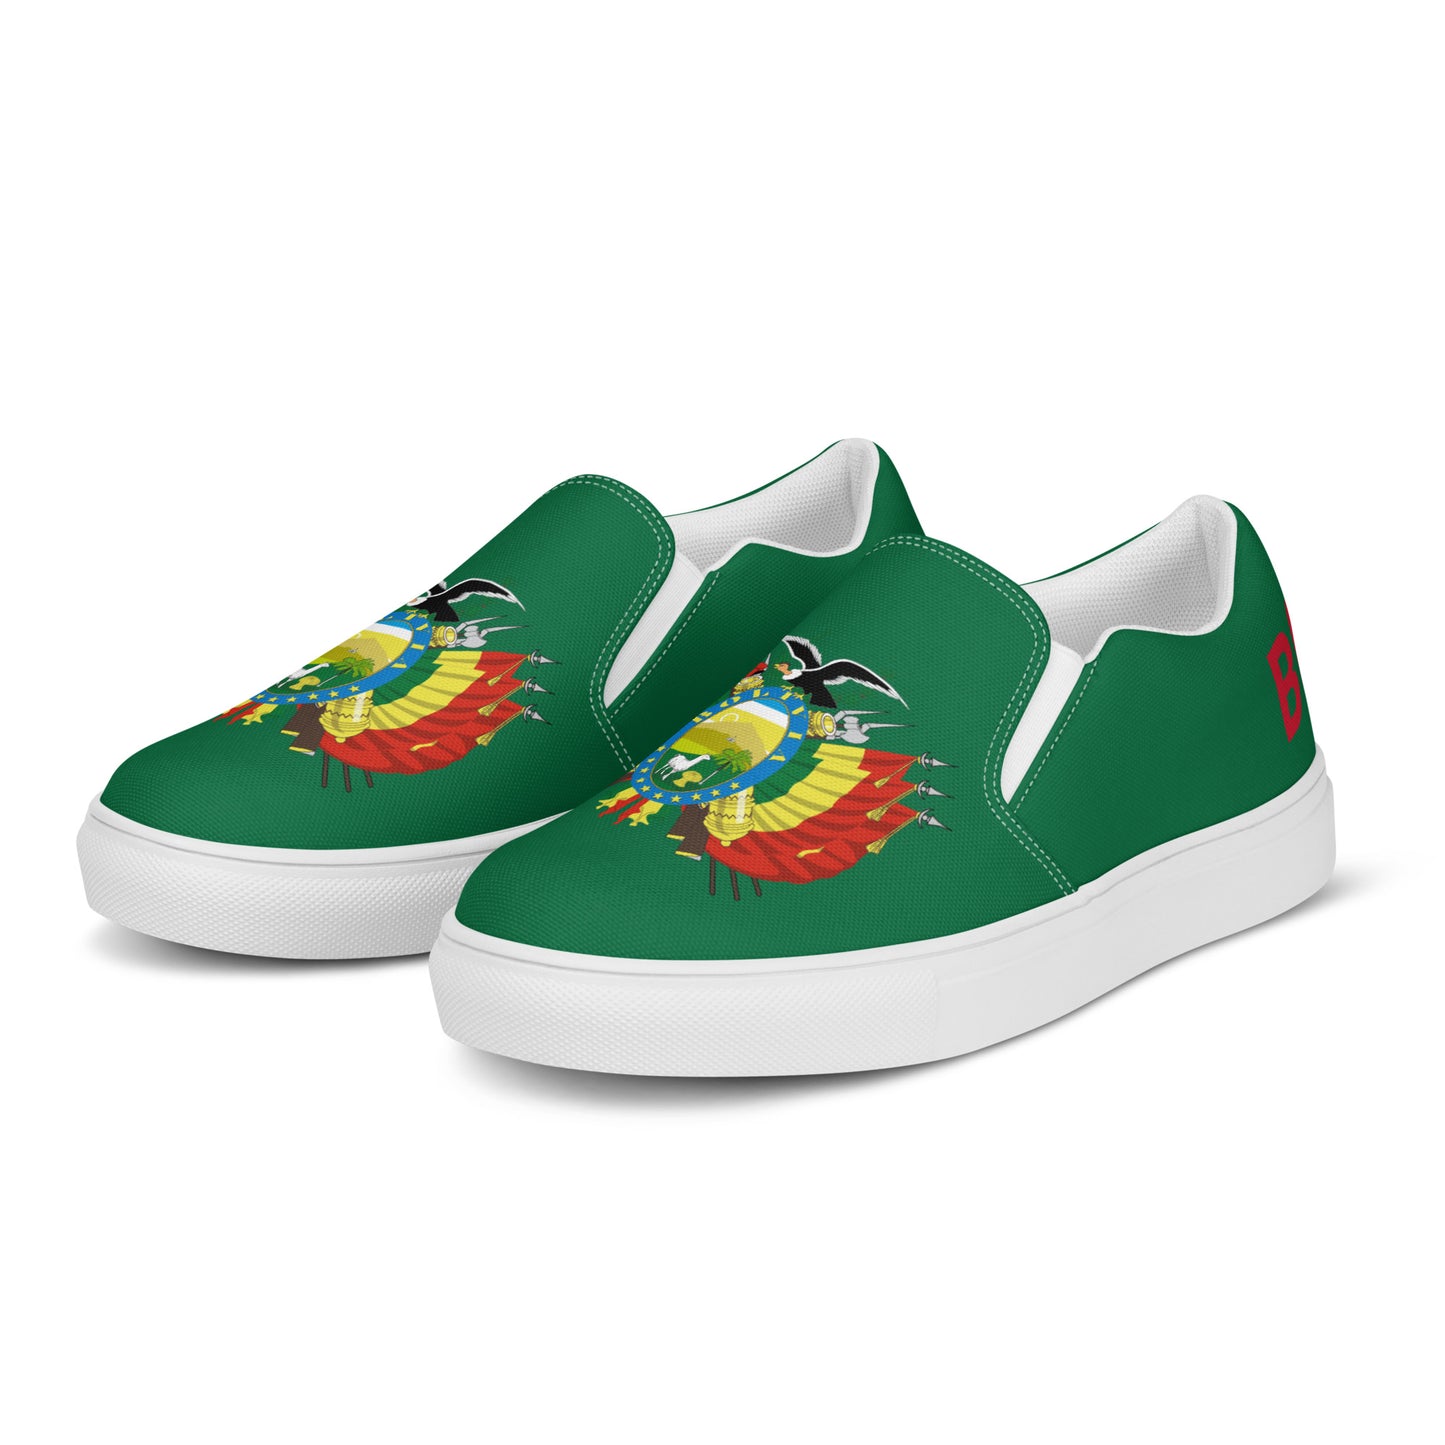 Bolivia - Women - Green - Slip-on shoes